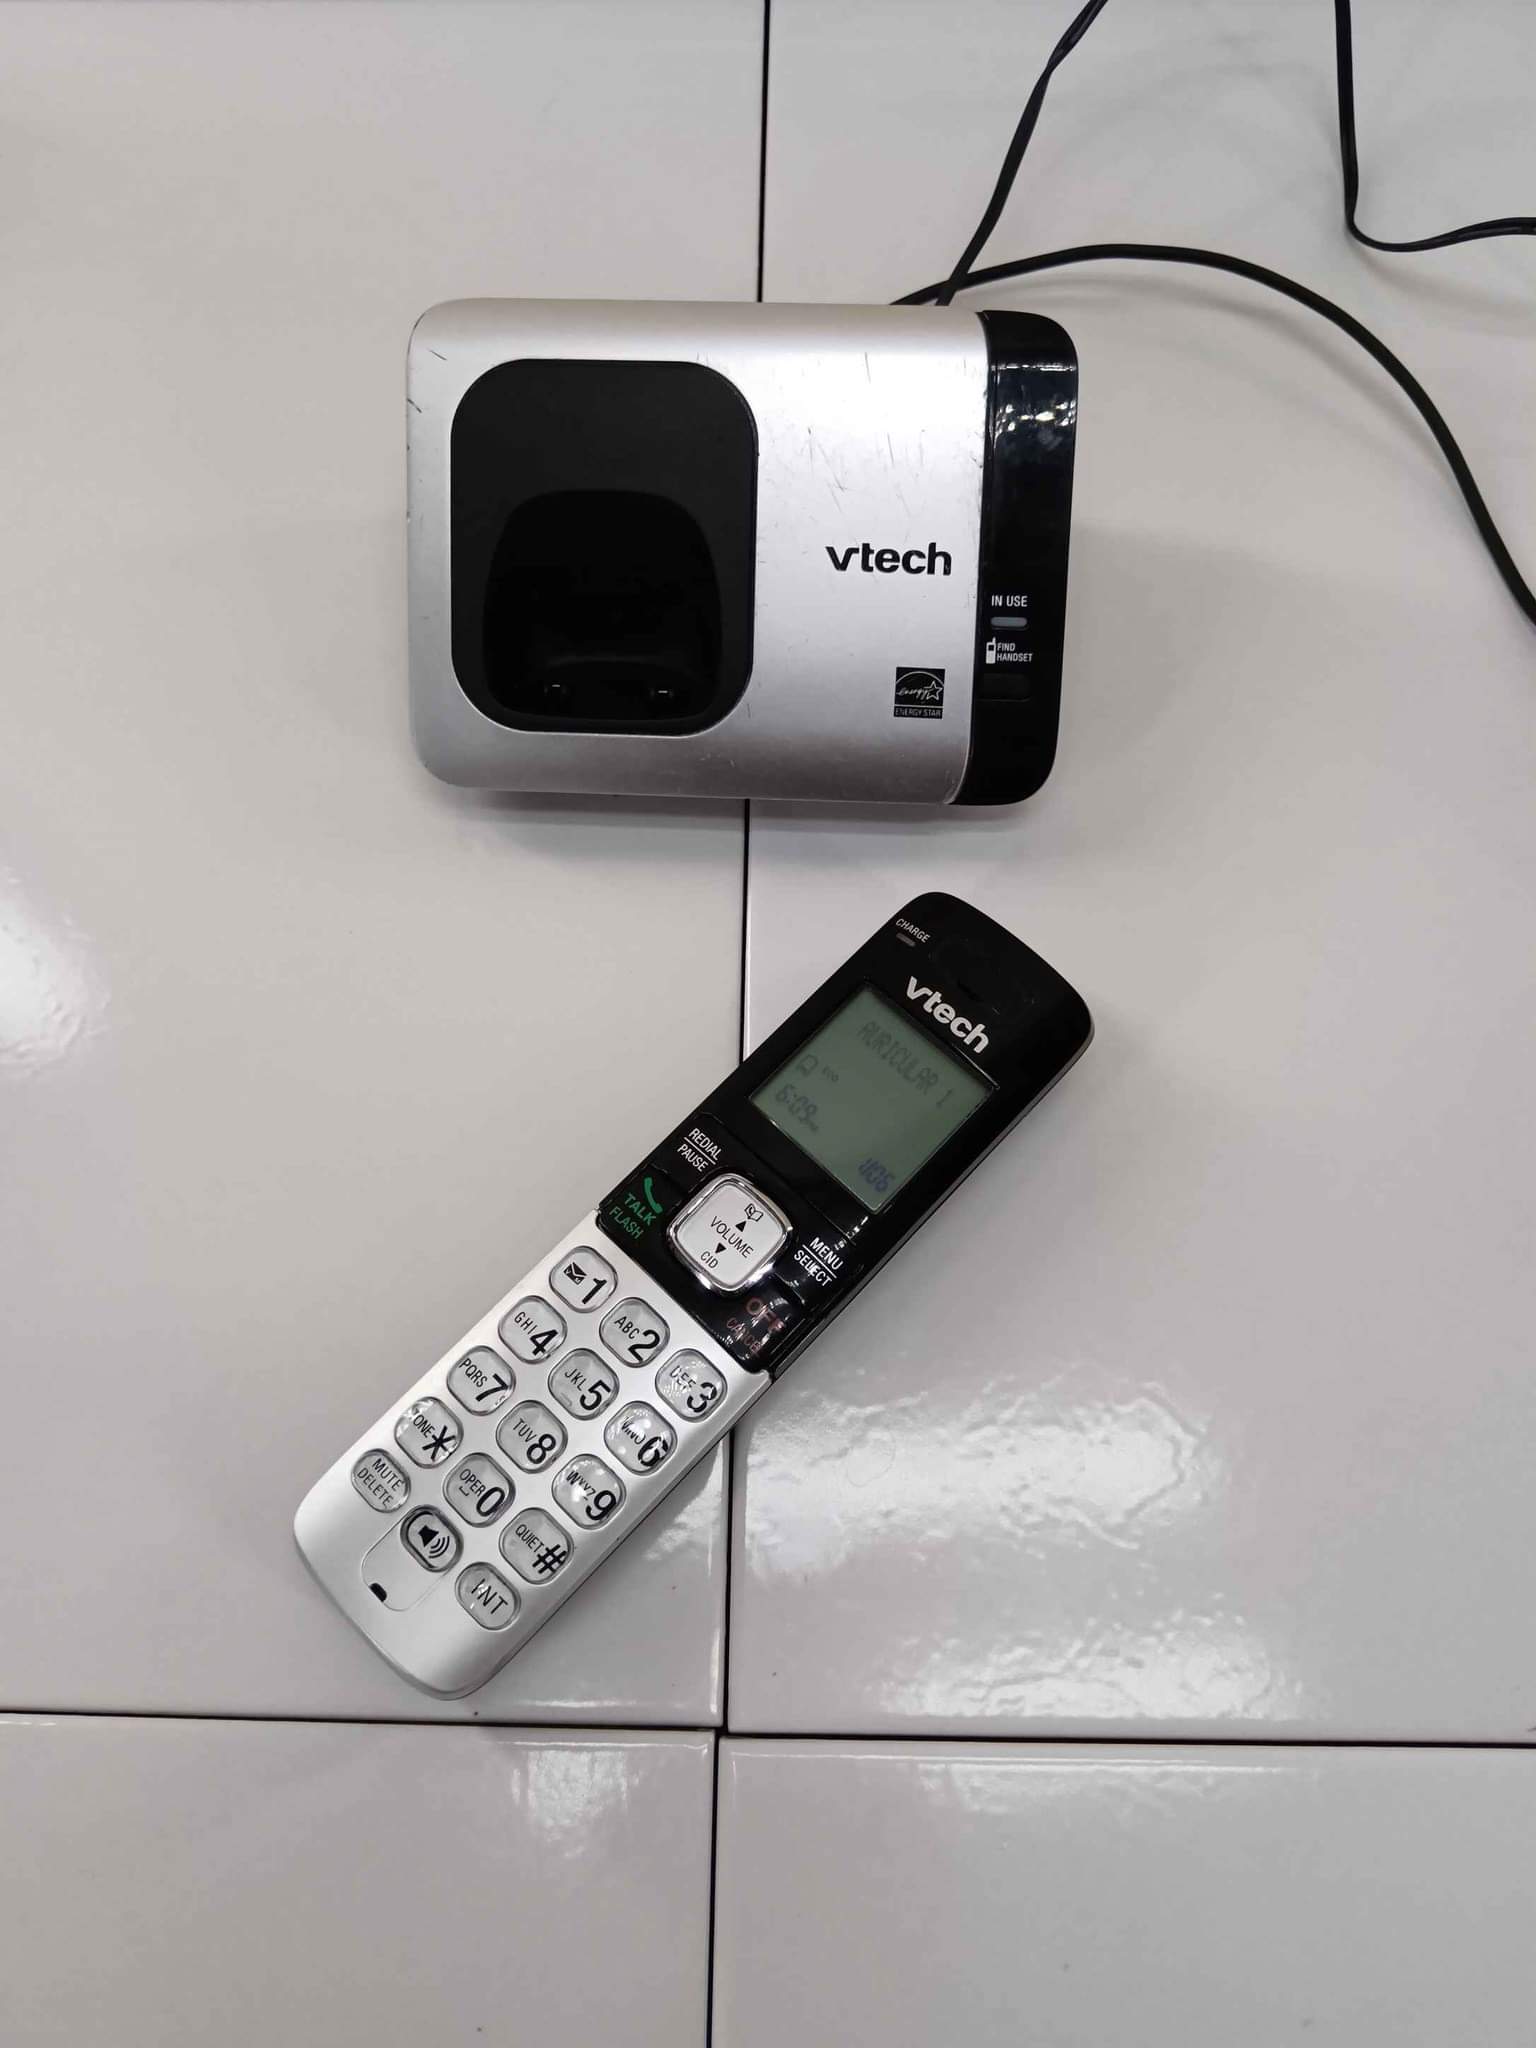 Ganga remato lindo y exclusivo teléfono inalambrico de uso profesional marca Vte